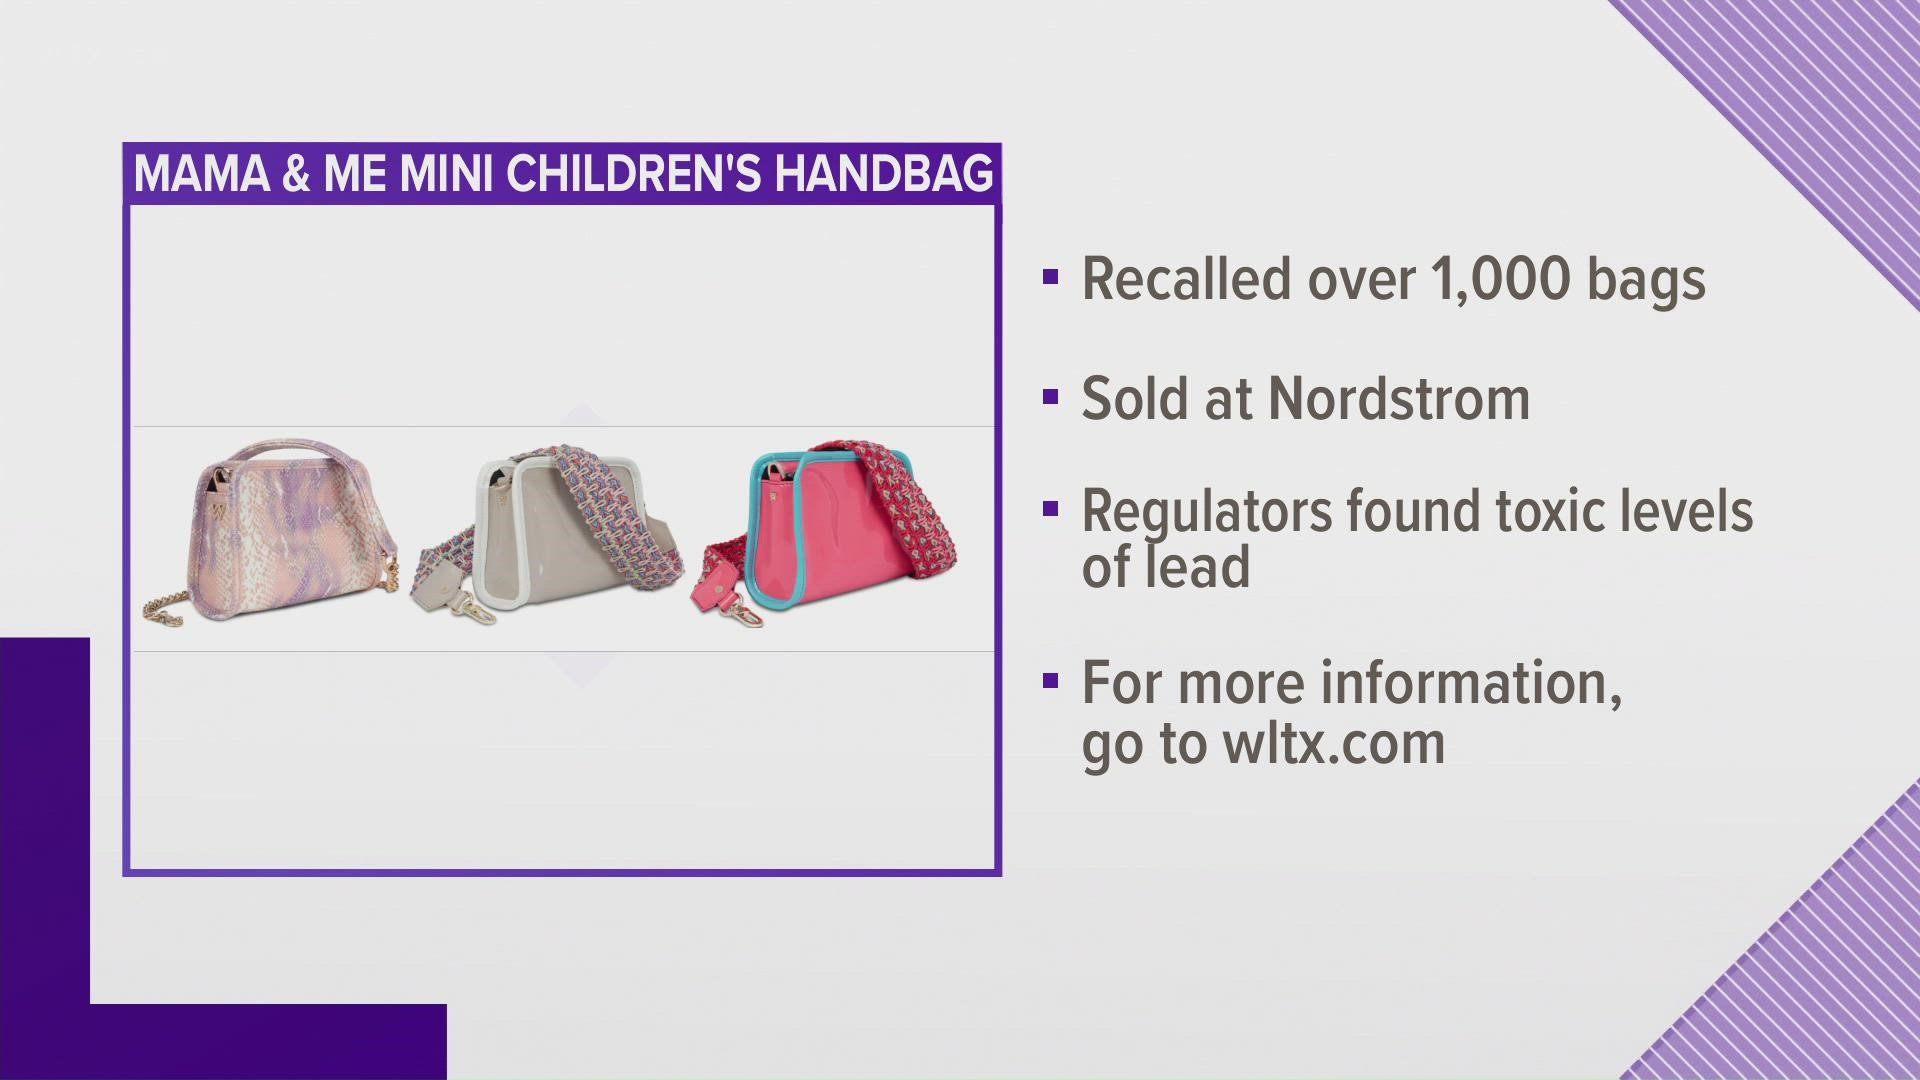 U.S. safety regulators found dangerous levels of lead in Mama & Me MINI Children’s Handbags.